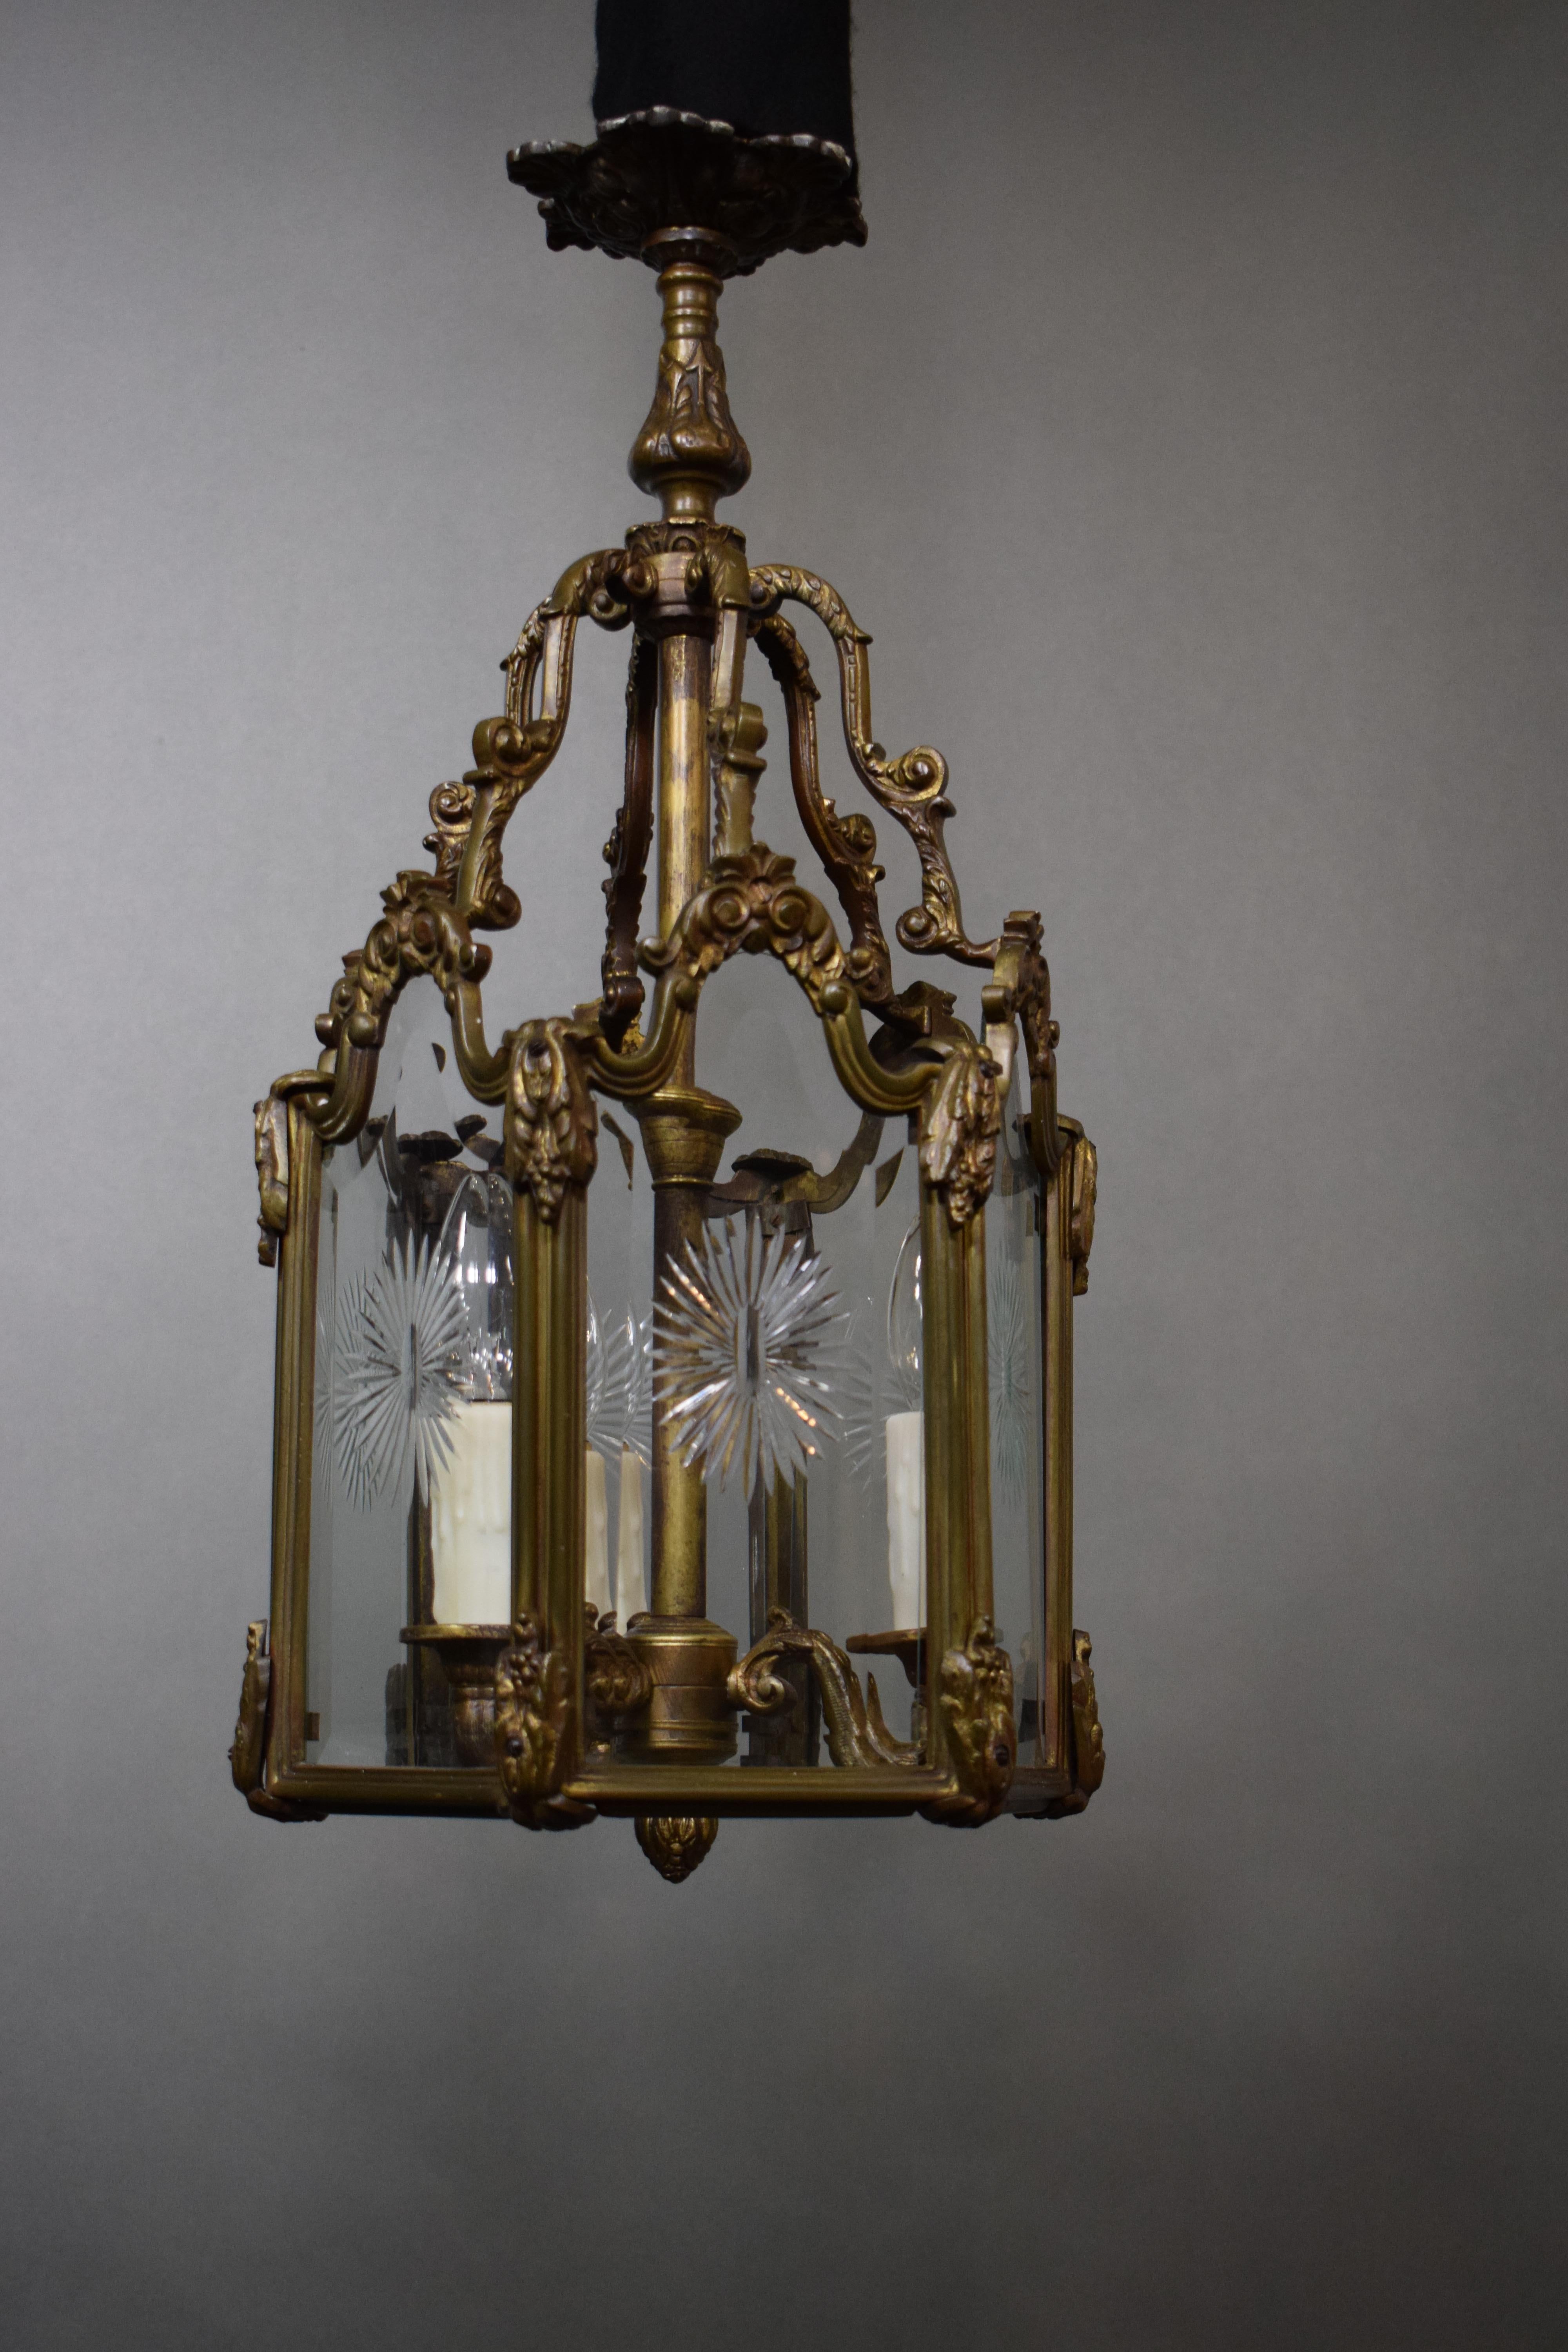 A fine and elegant bronze hexagonal lantern featuring handcut glass panels, France, circa 1920. 3 lights.
Dimensions: Height 24